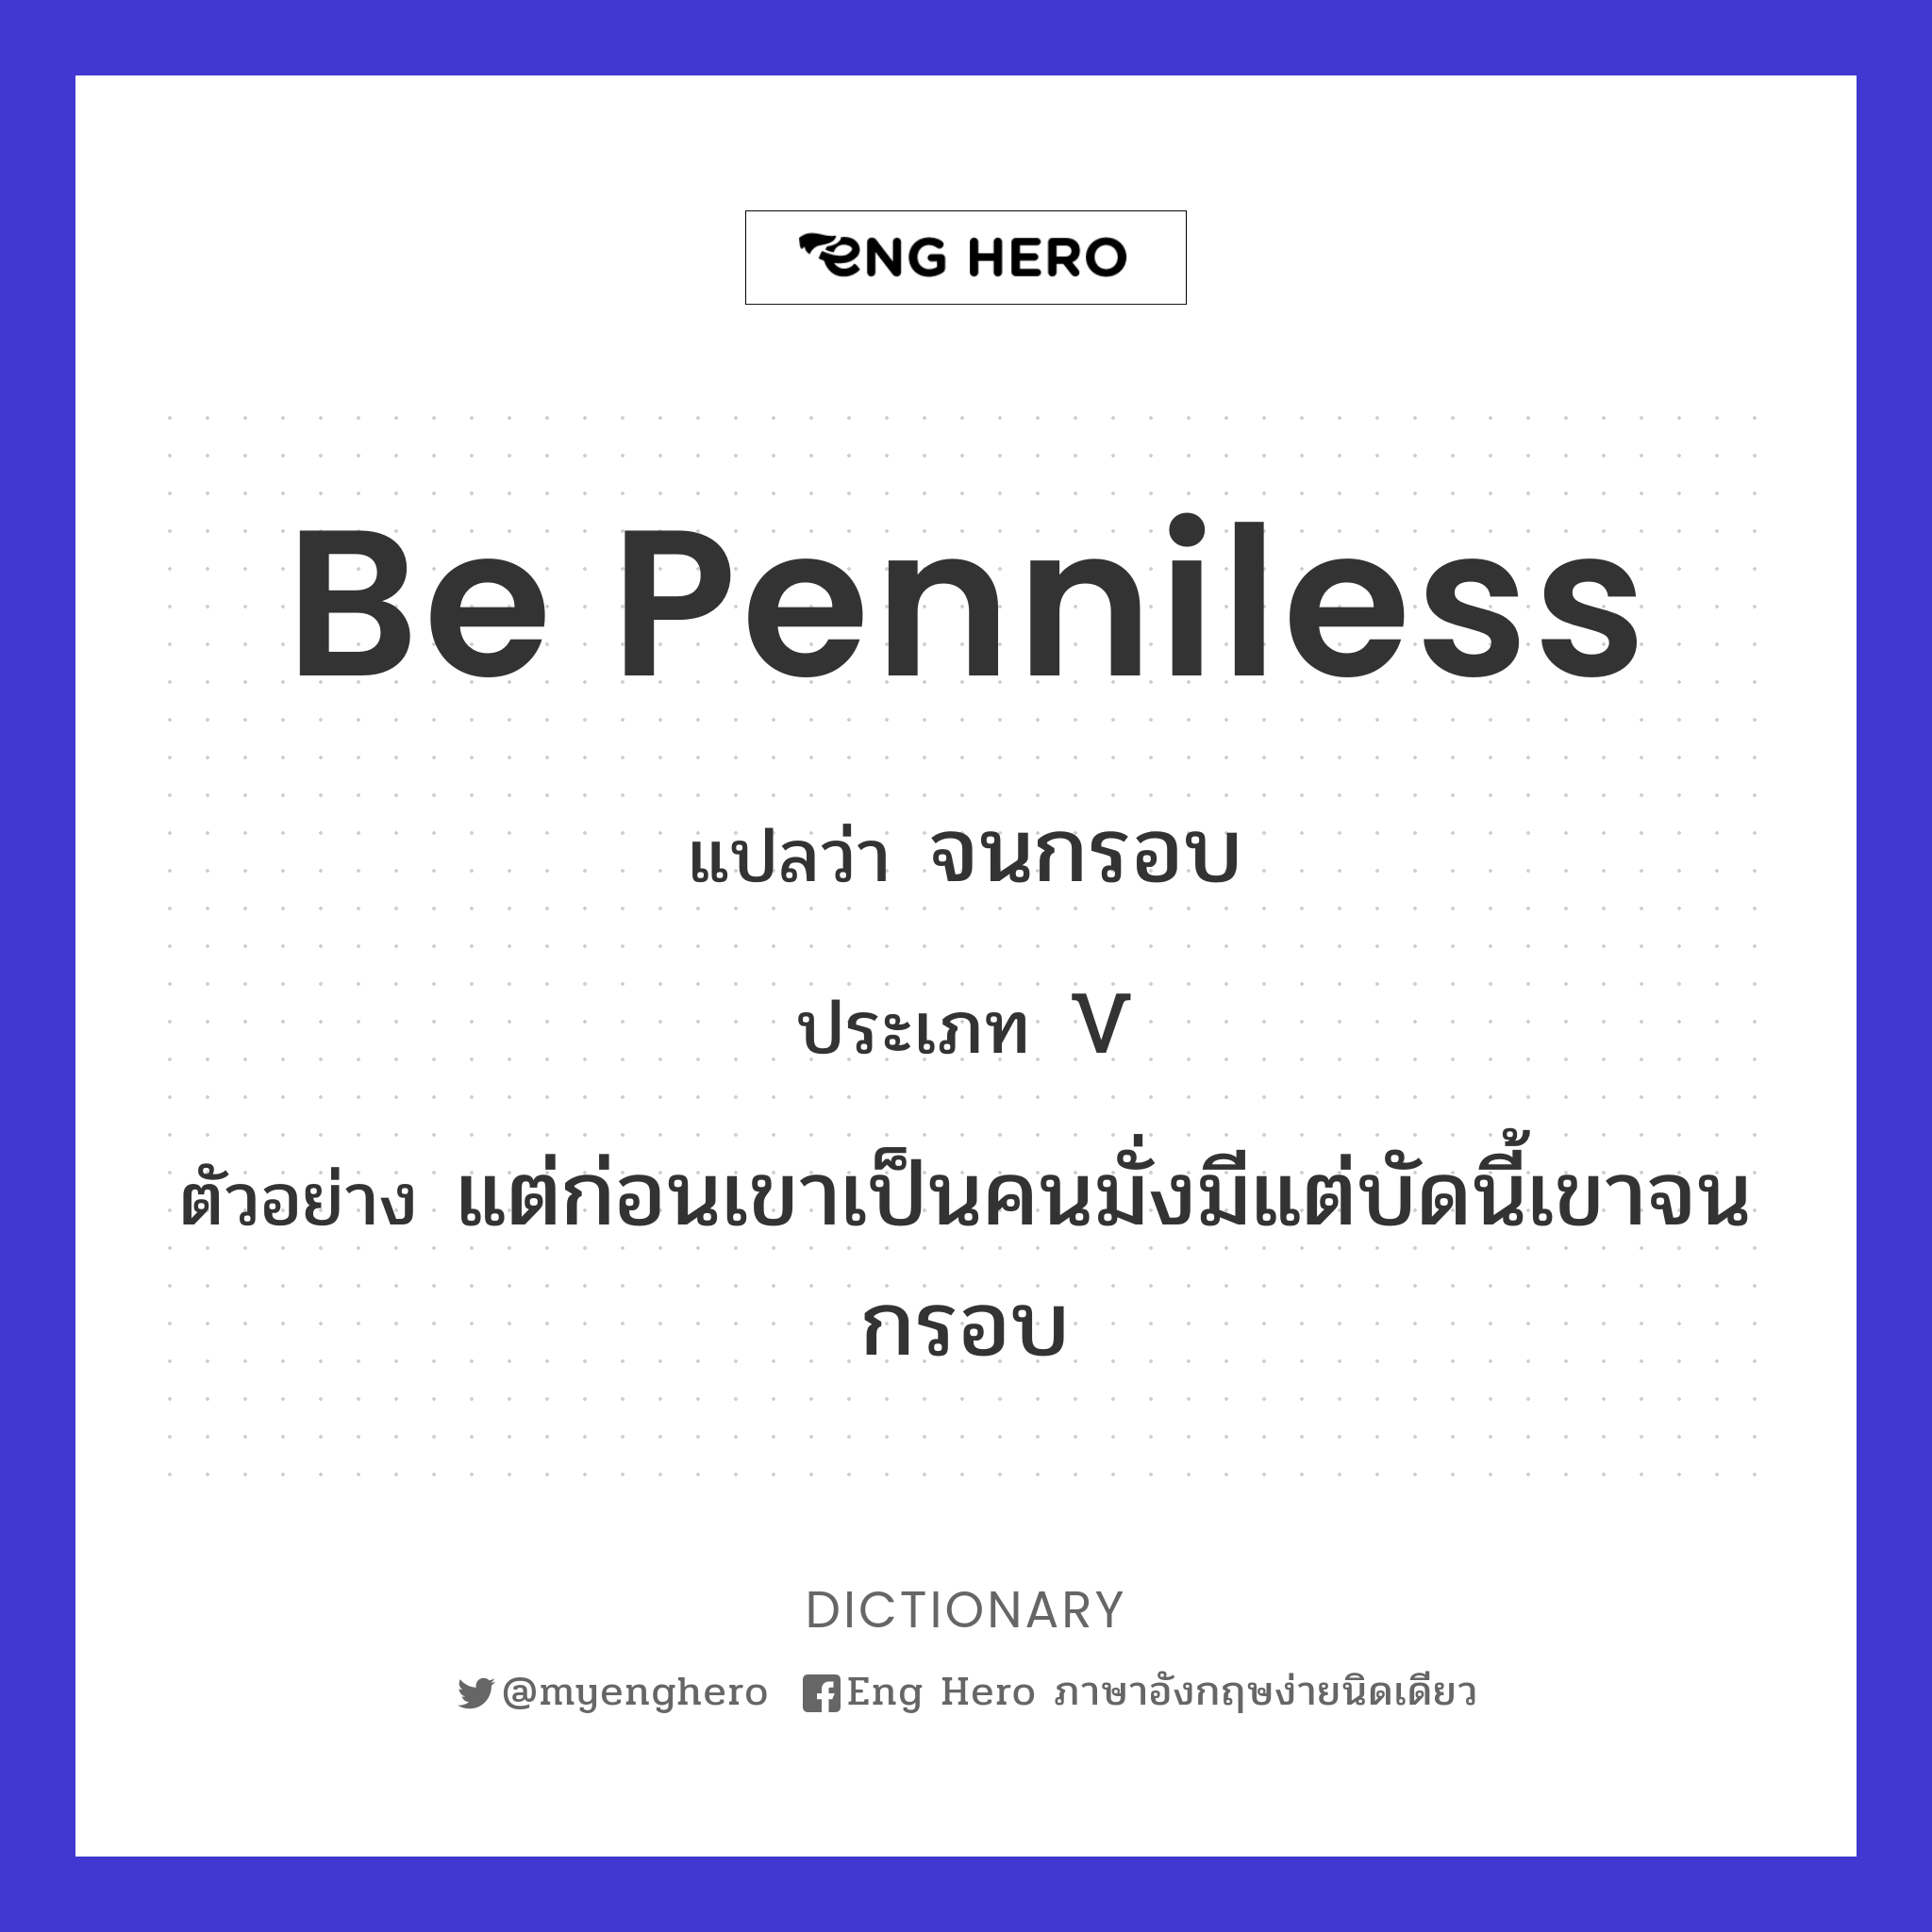 be penniless